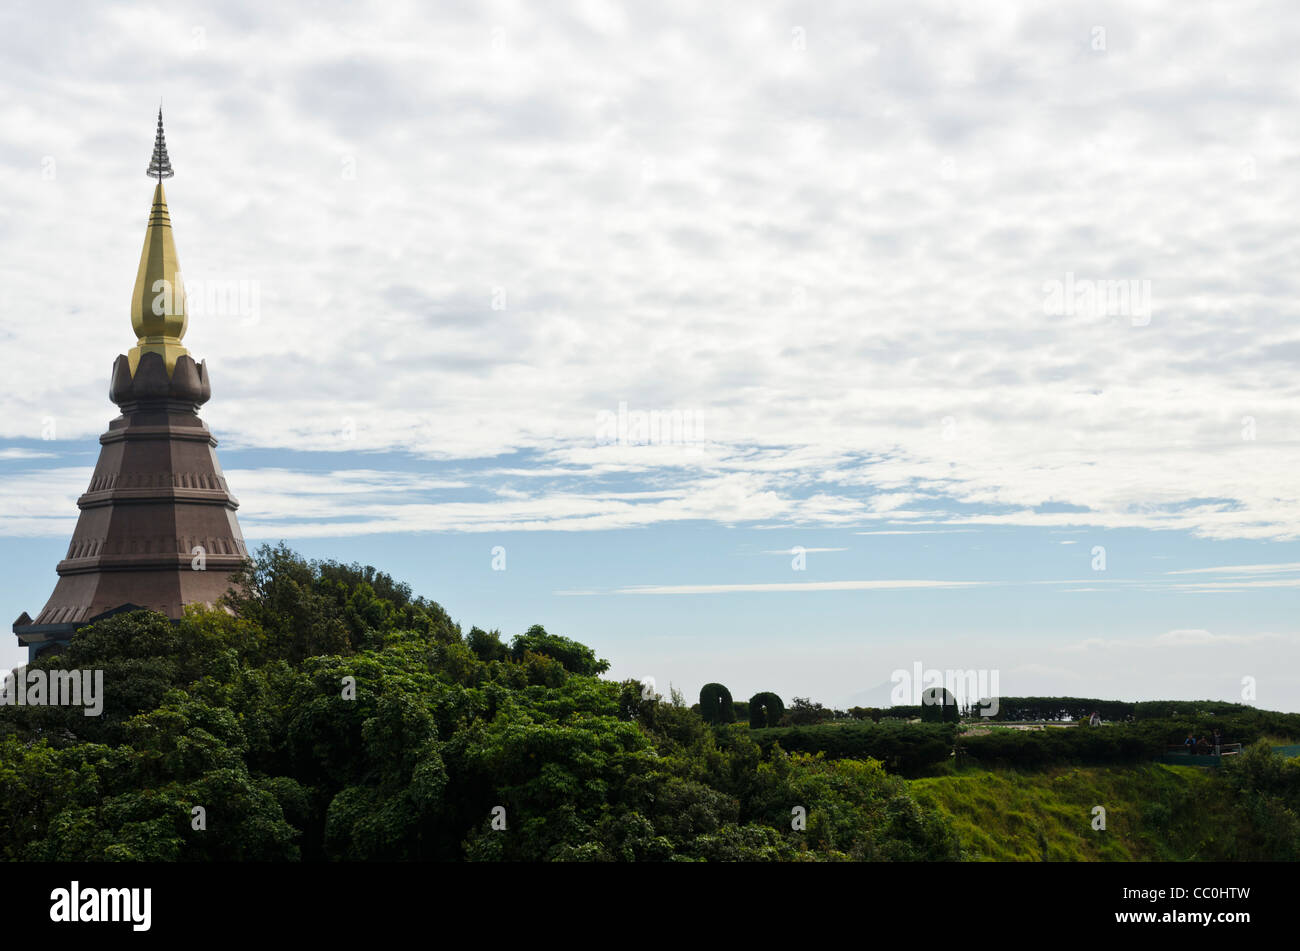 King's pagoda or Phra Mahathat Napamethanidon in Doi Inthanon National Park in northern Thailand Stock Photo